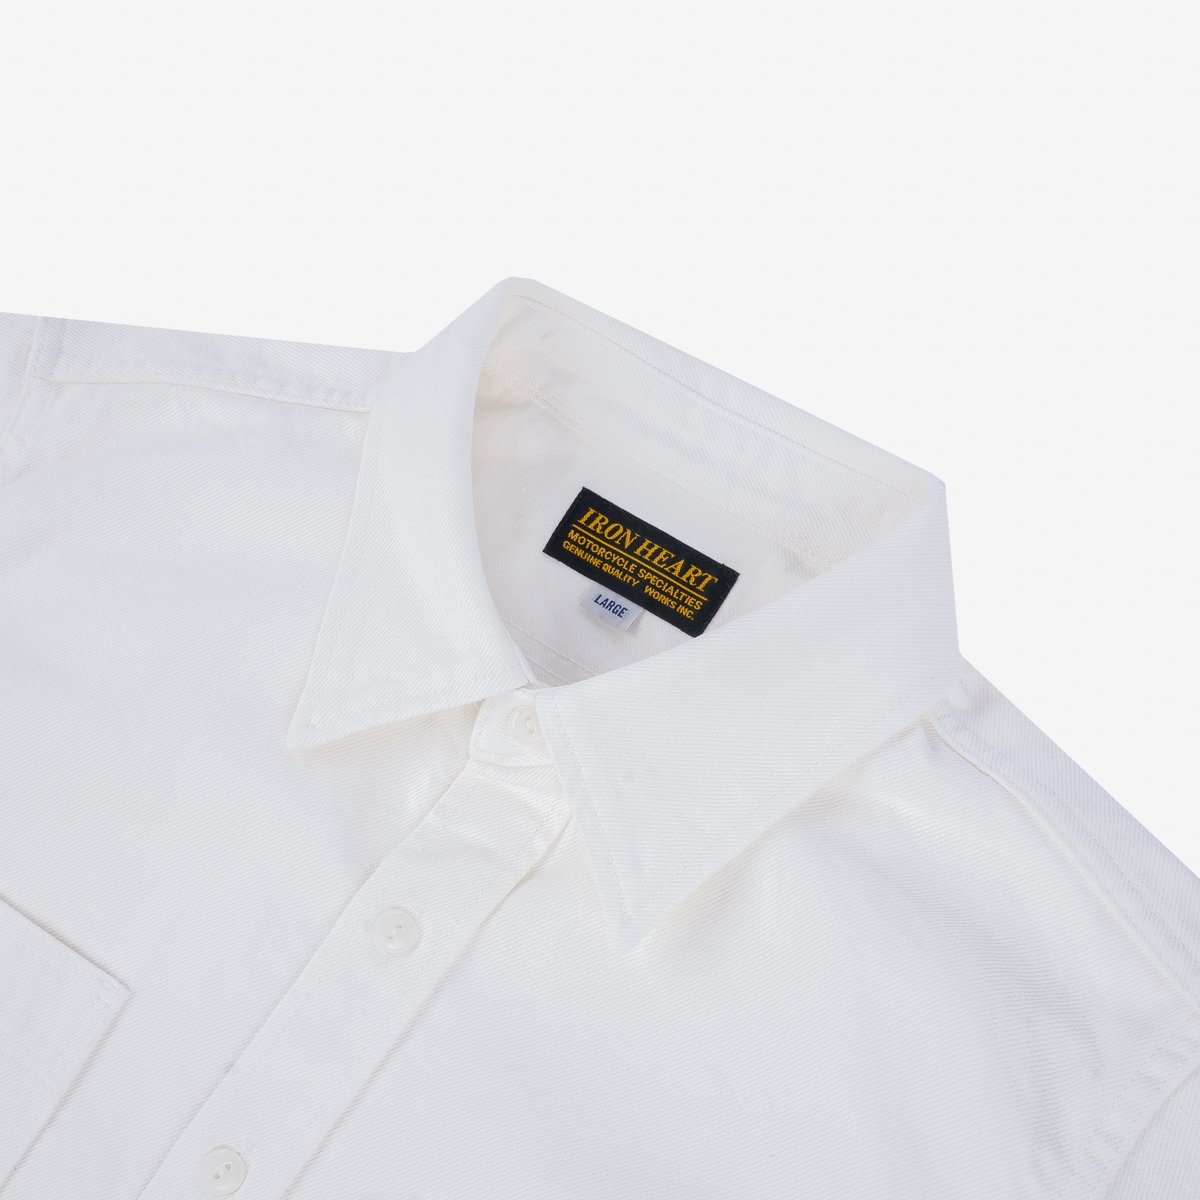 IHSH-391-WHT 13.5oz Denim Work Shirt - White - 7